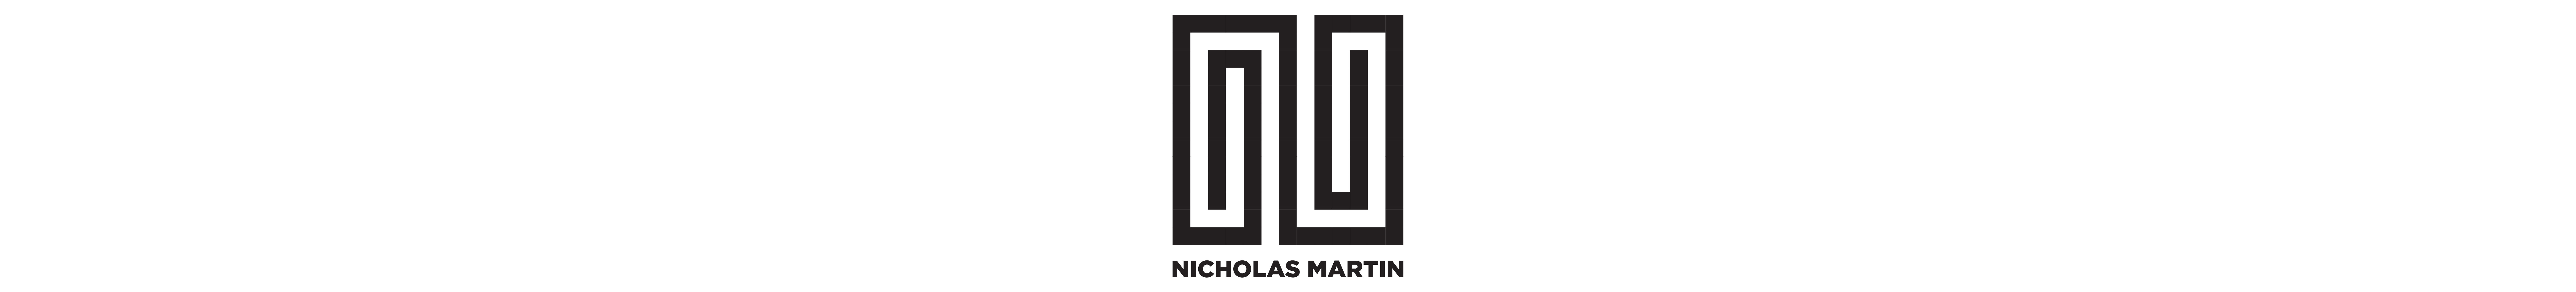 Баннер профиля Nicholas Martin